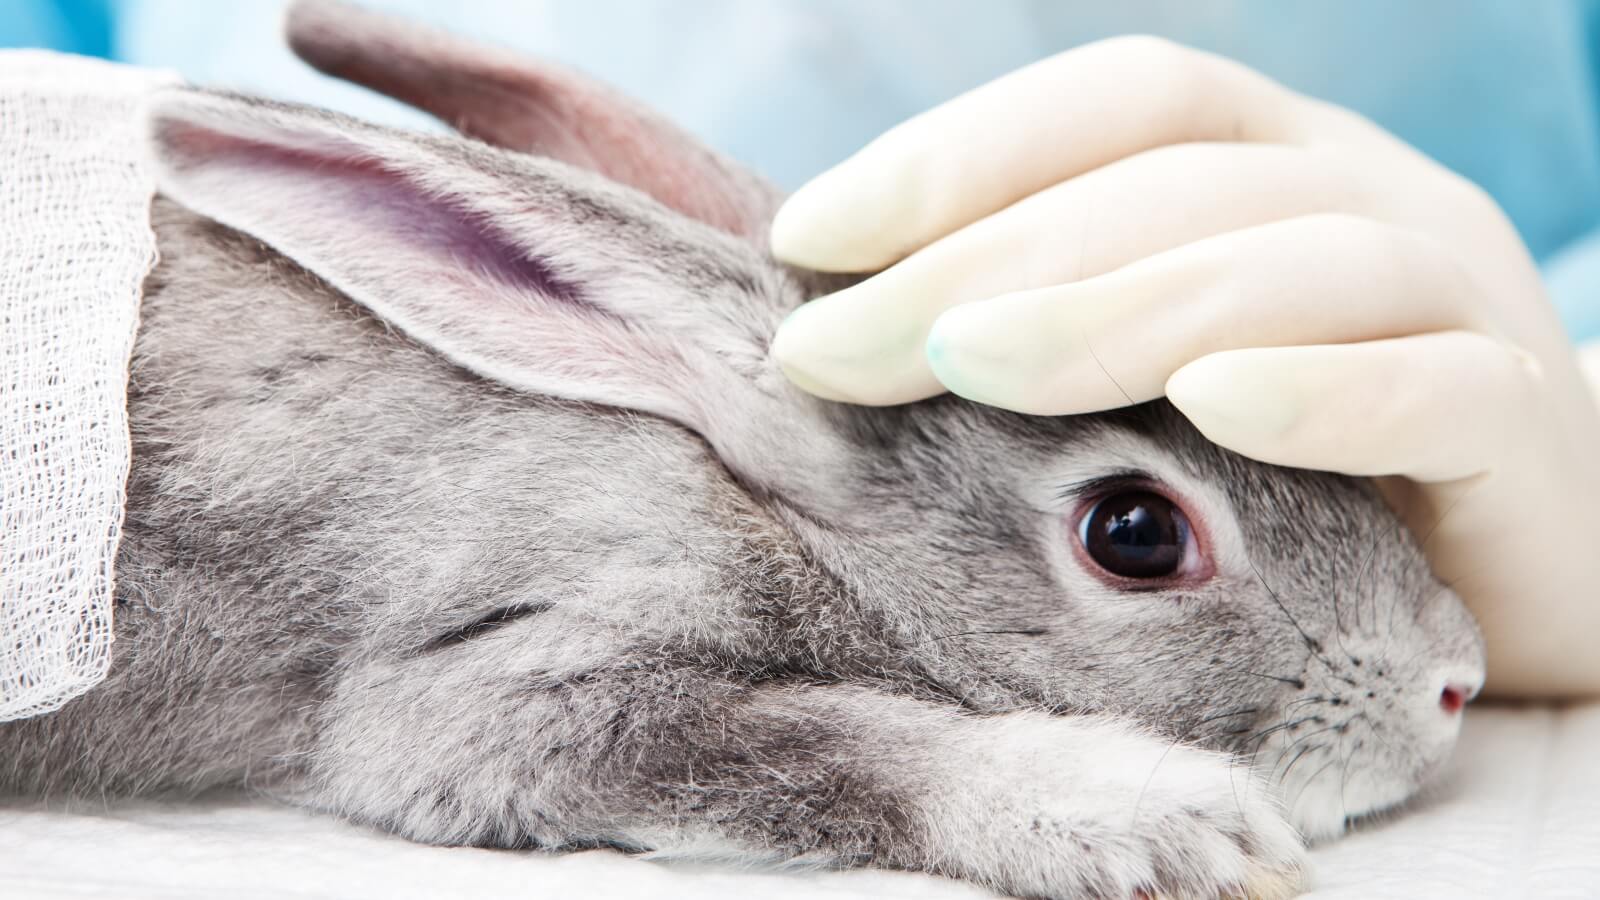 Animal experiments cosmetics rabbit